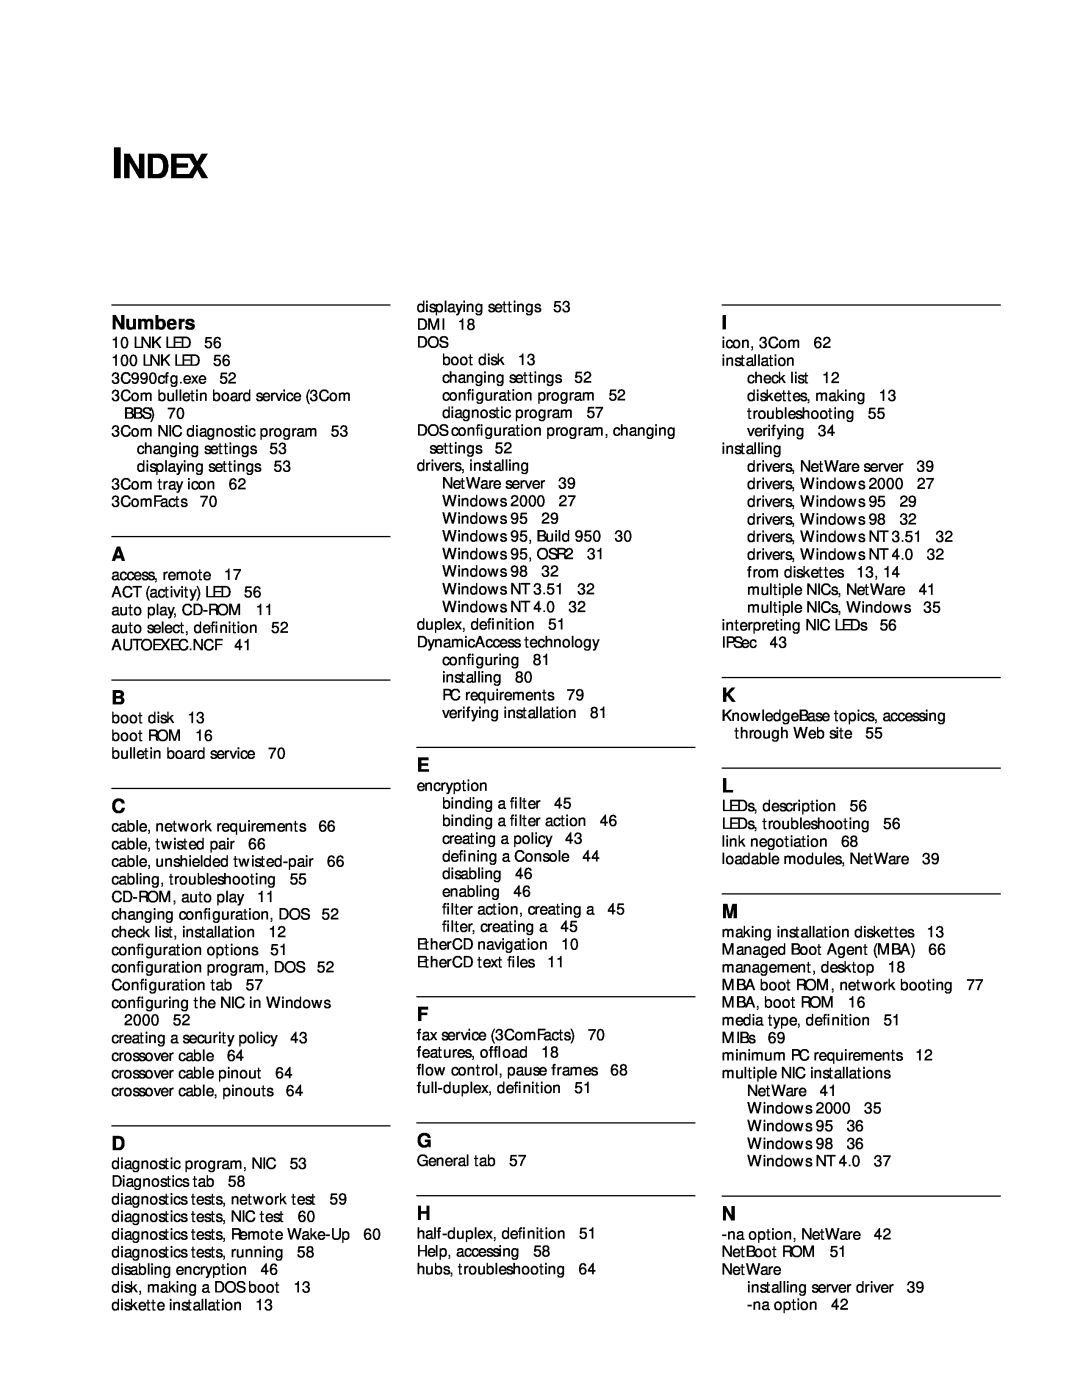 3Com 3CR990 manual Index, Numbers 